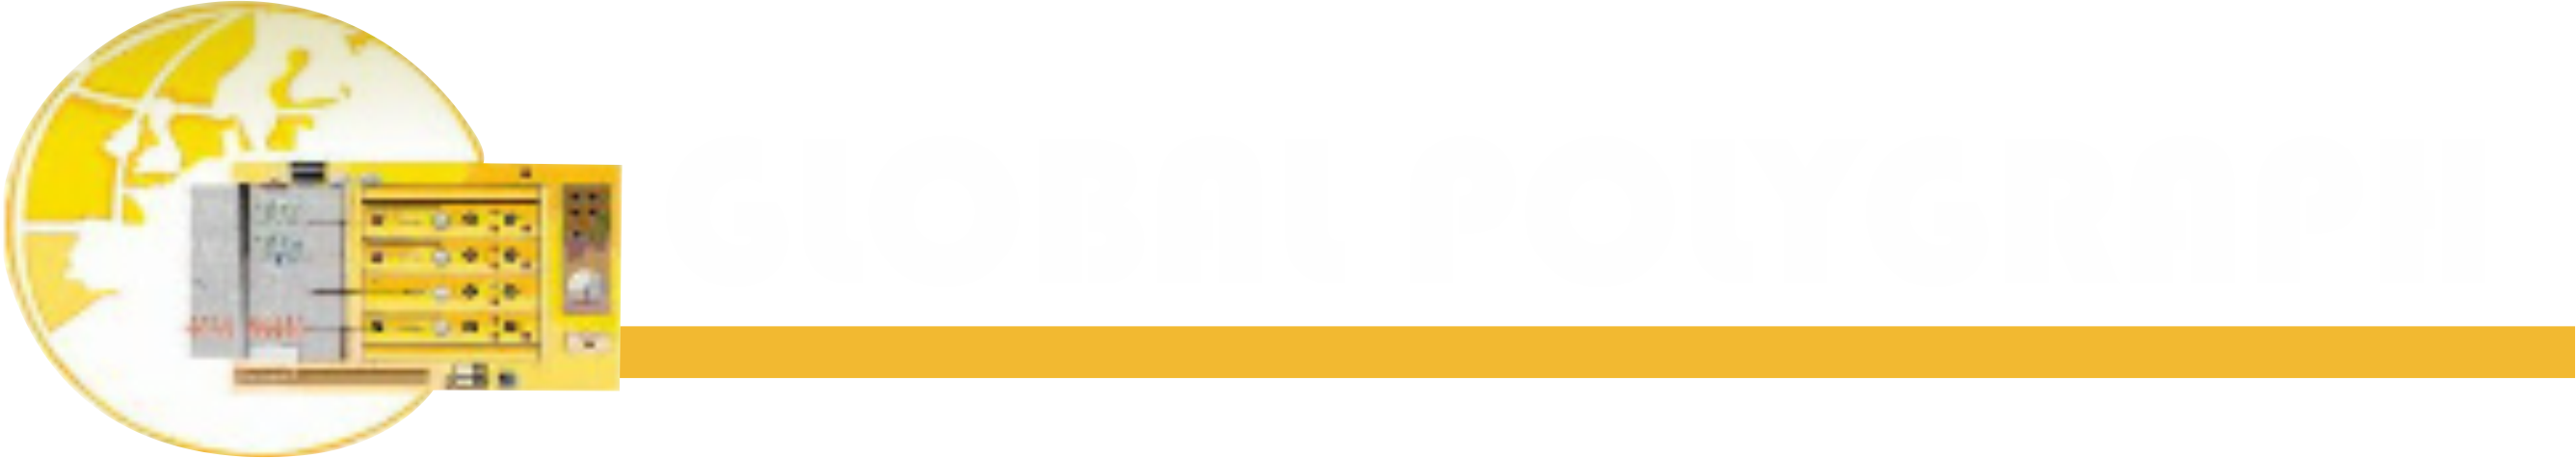 Global Polygraph